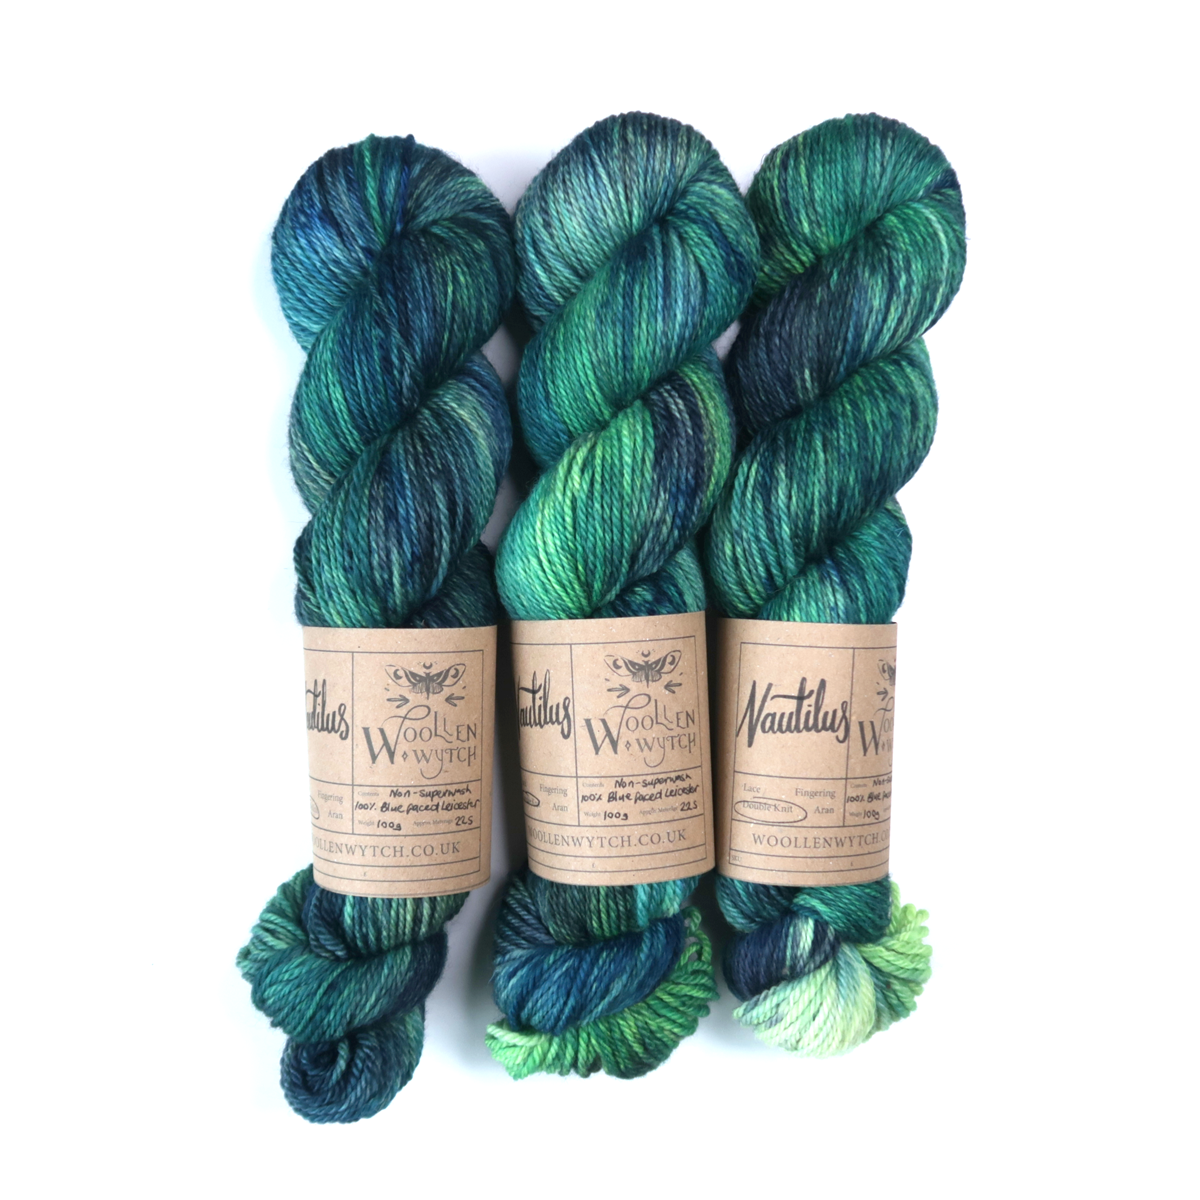 underwater nautilus hand dyed double knit yarnusing british bfl wool by woollen wytch